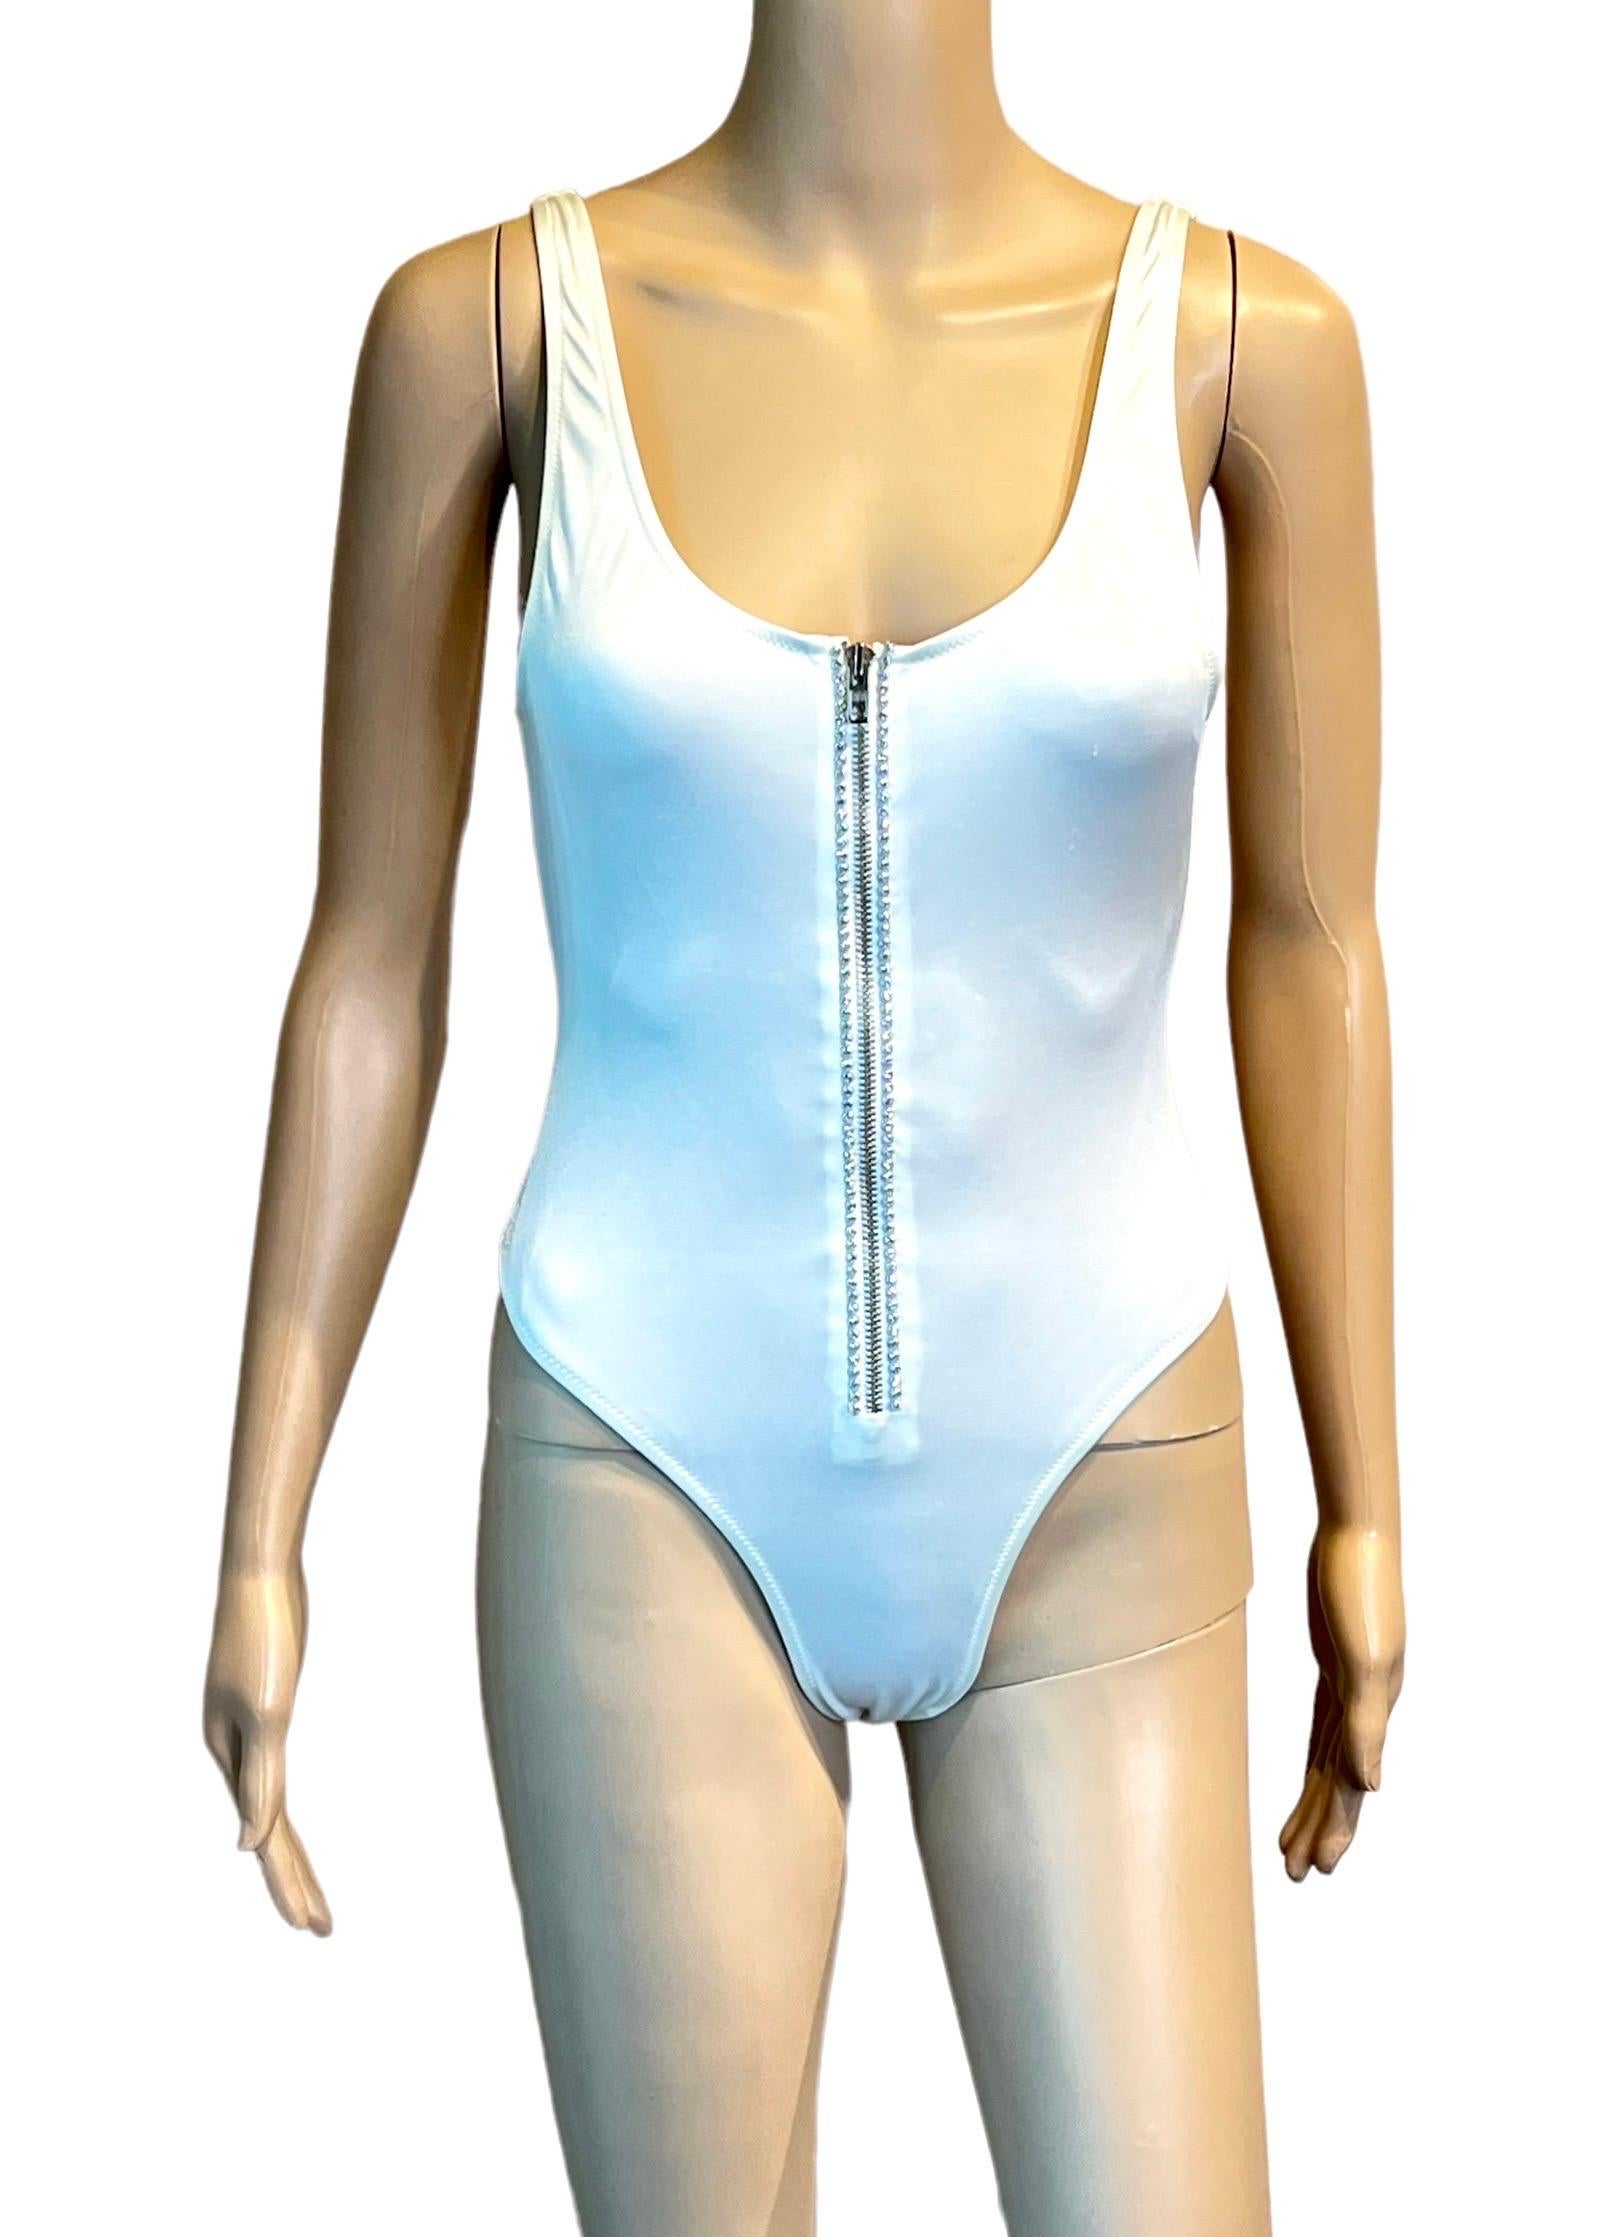 Gianni Versace S/S 1996 Vintage Crystal Zipper White Bodysuit Swimwear Swimsuit For Sale 4